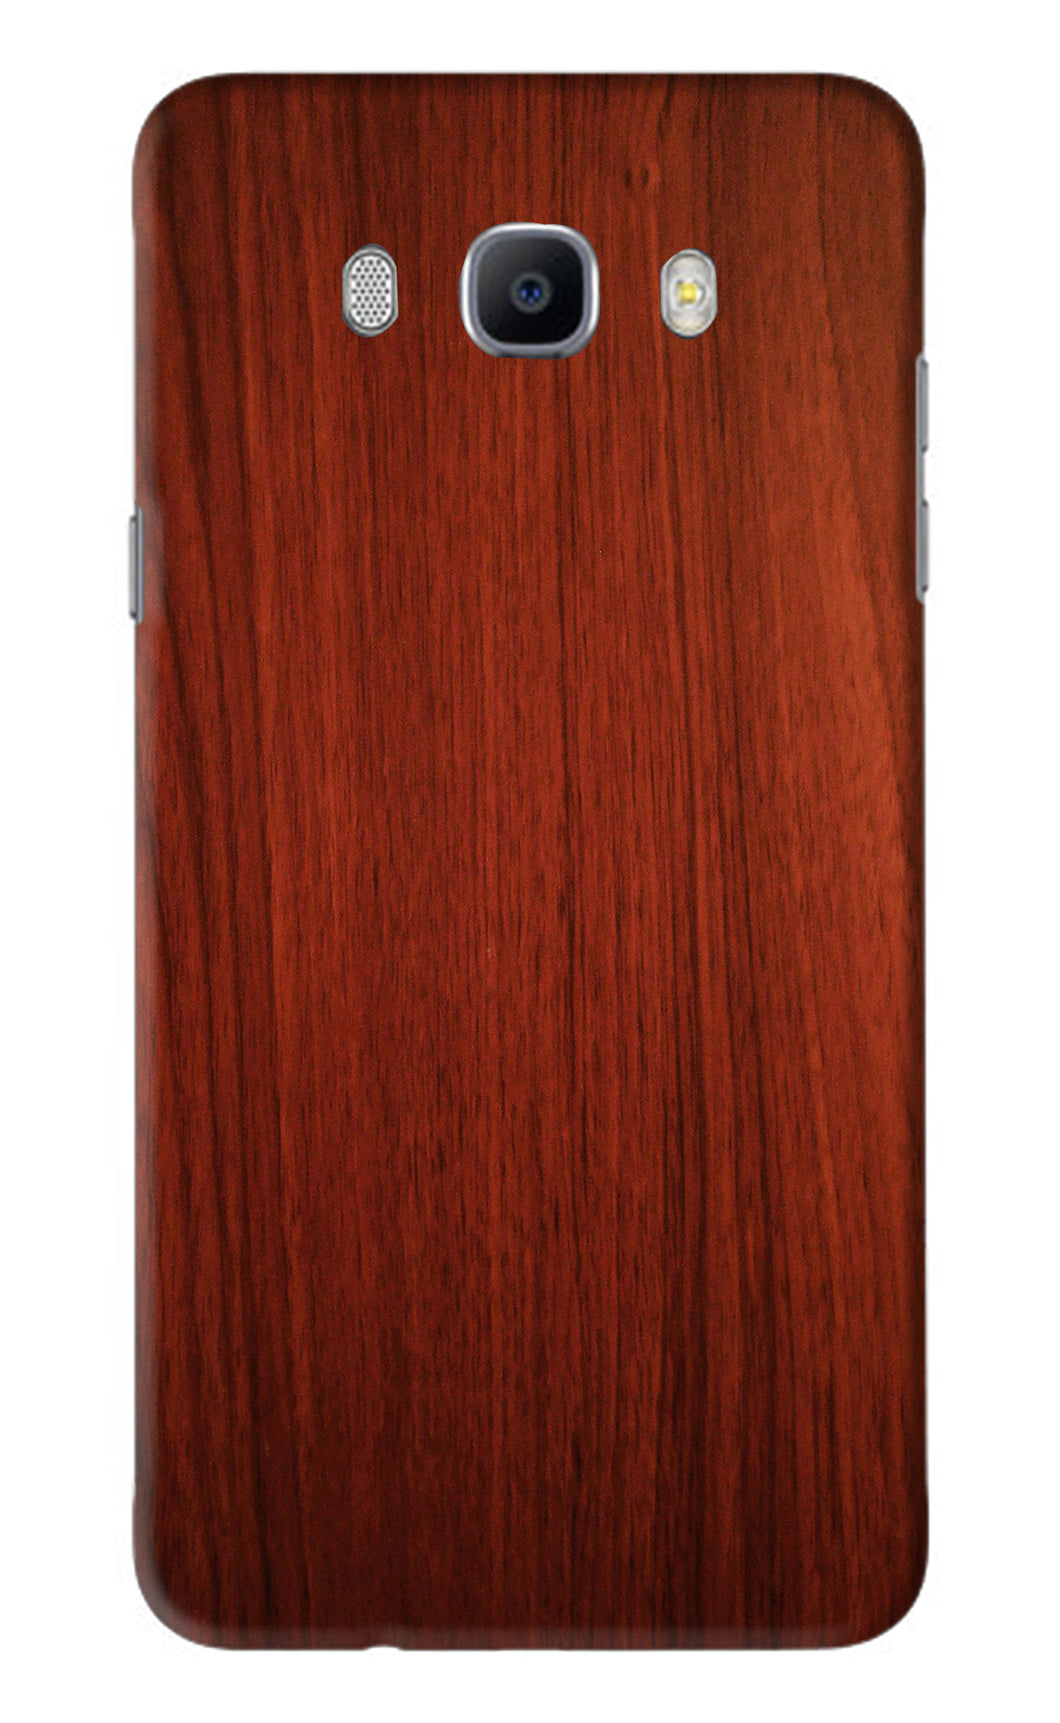 Wooden Plain Pattern Samsung Galaxy J7 2016 Back Skin Wrap